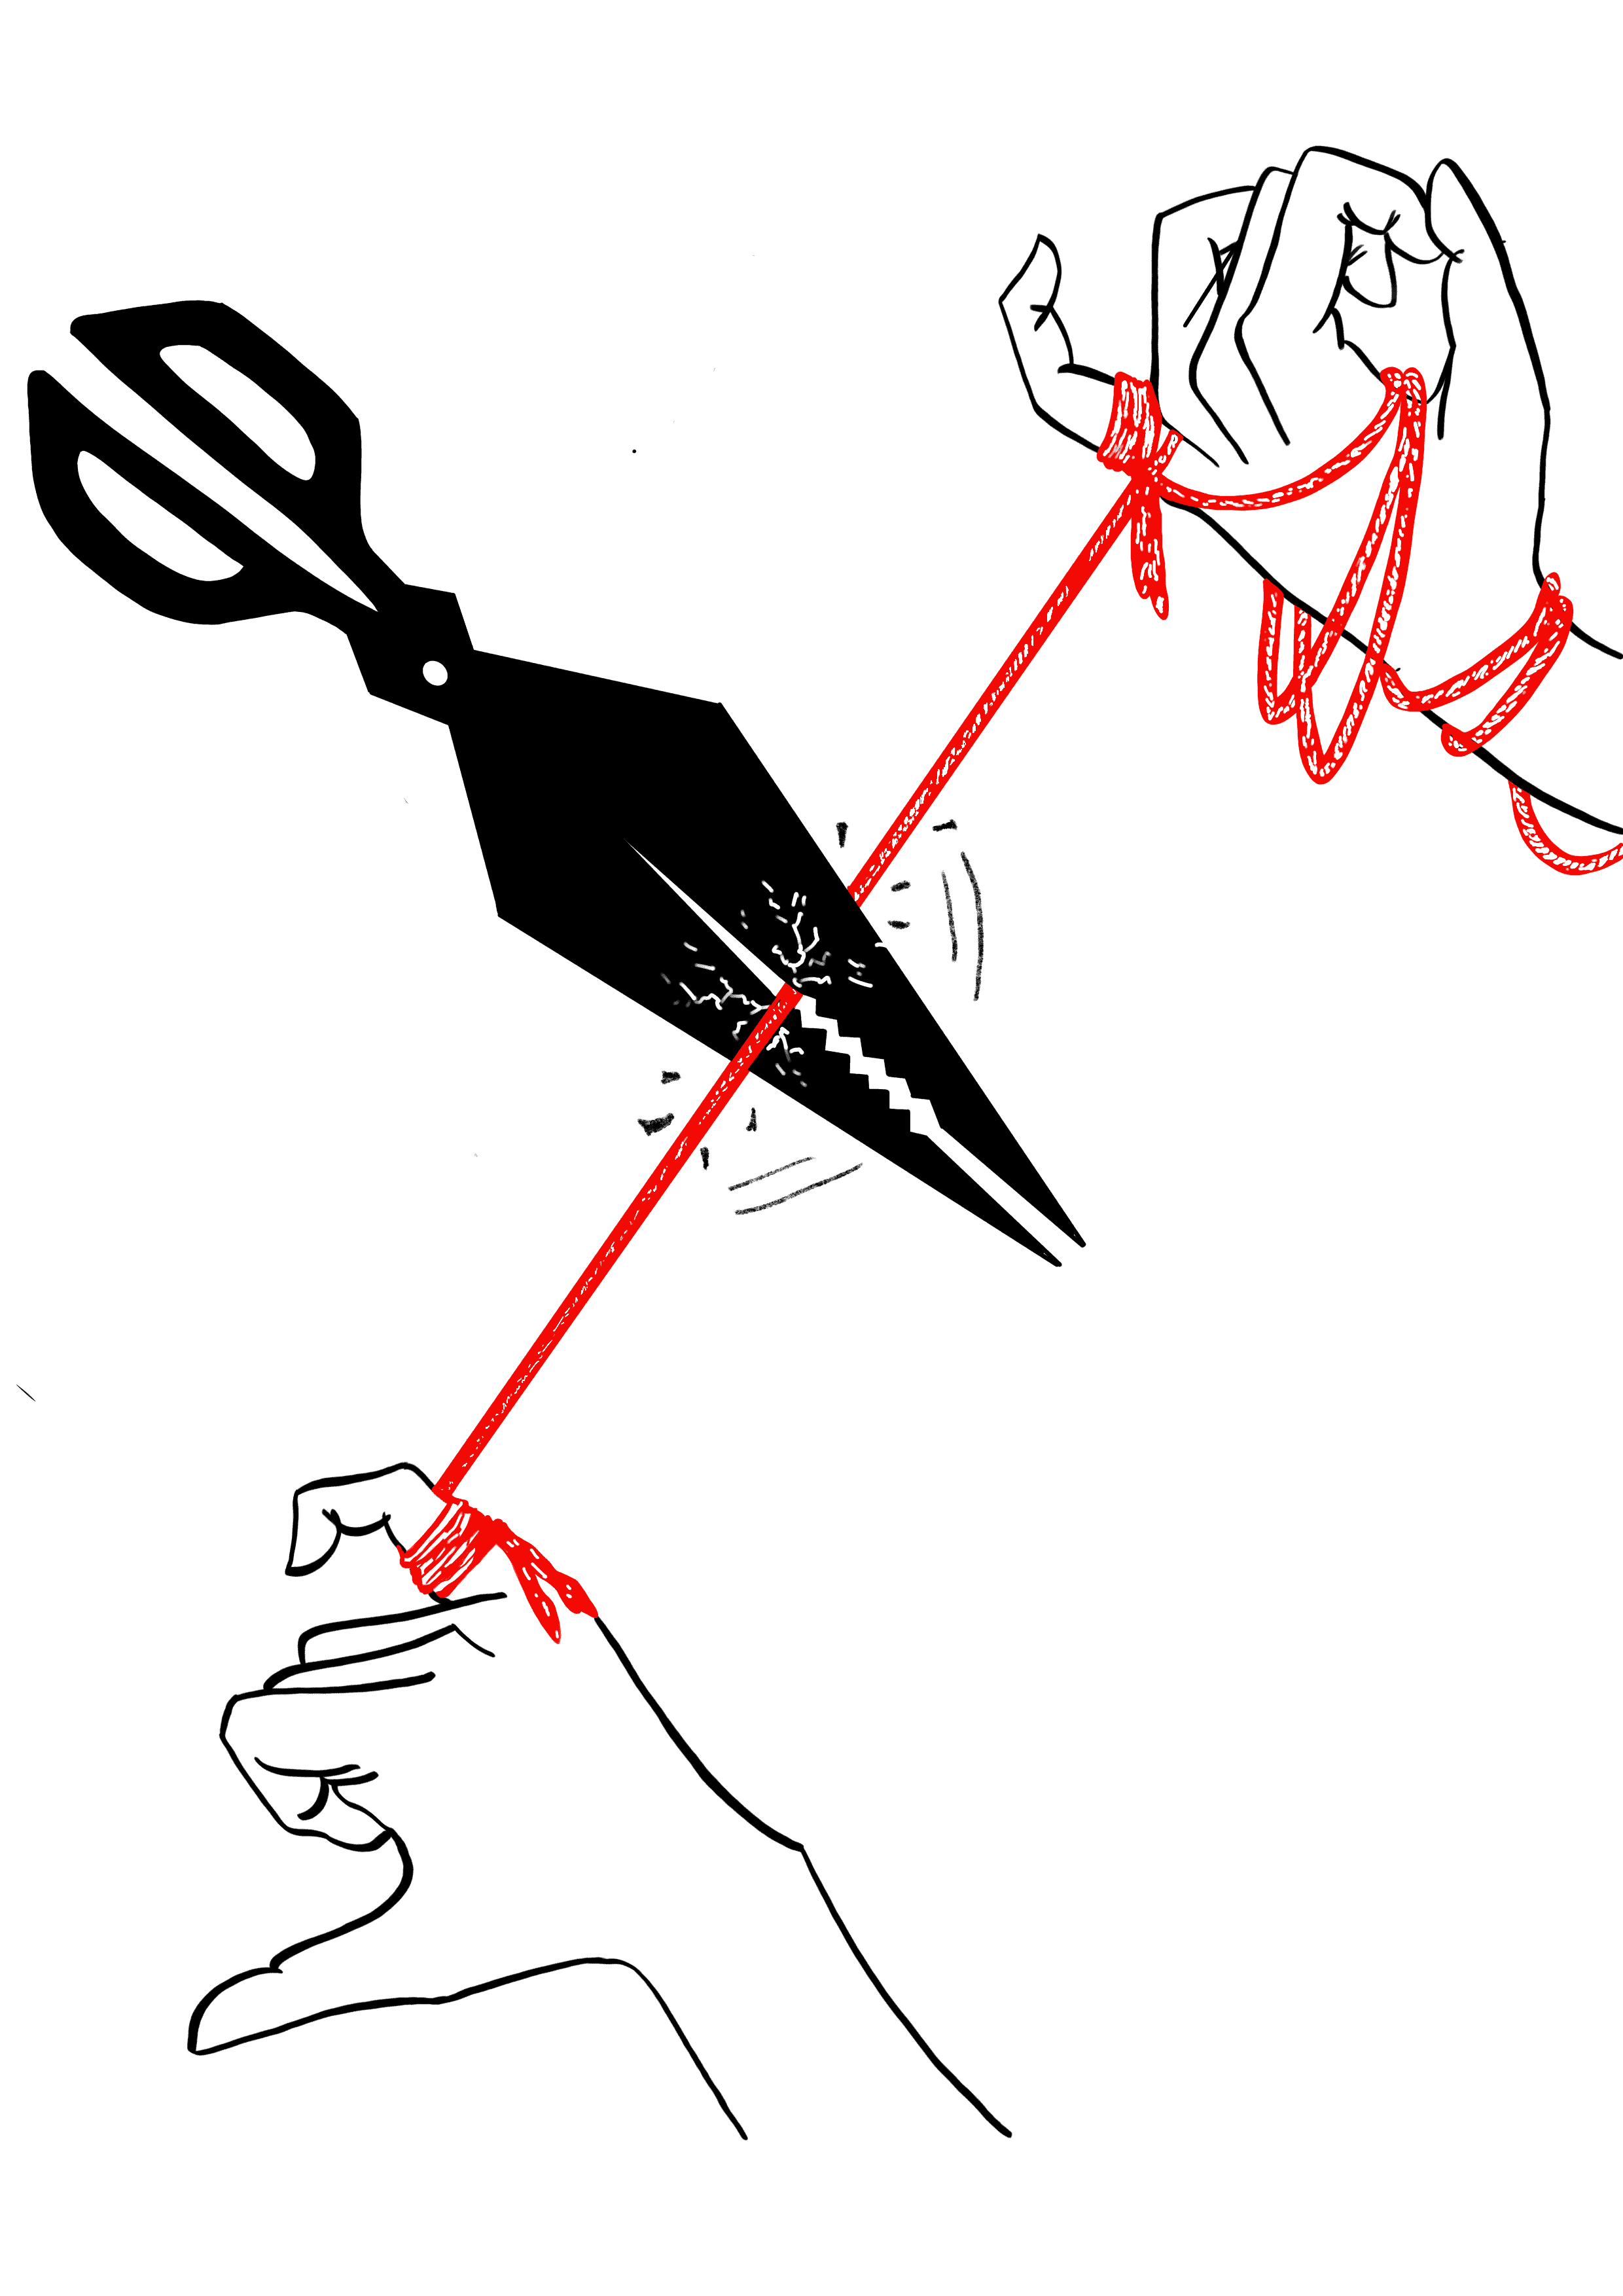 unbreakable bond partner customer scissor illustration